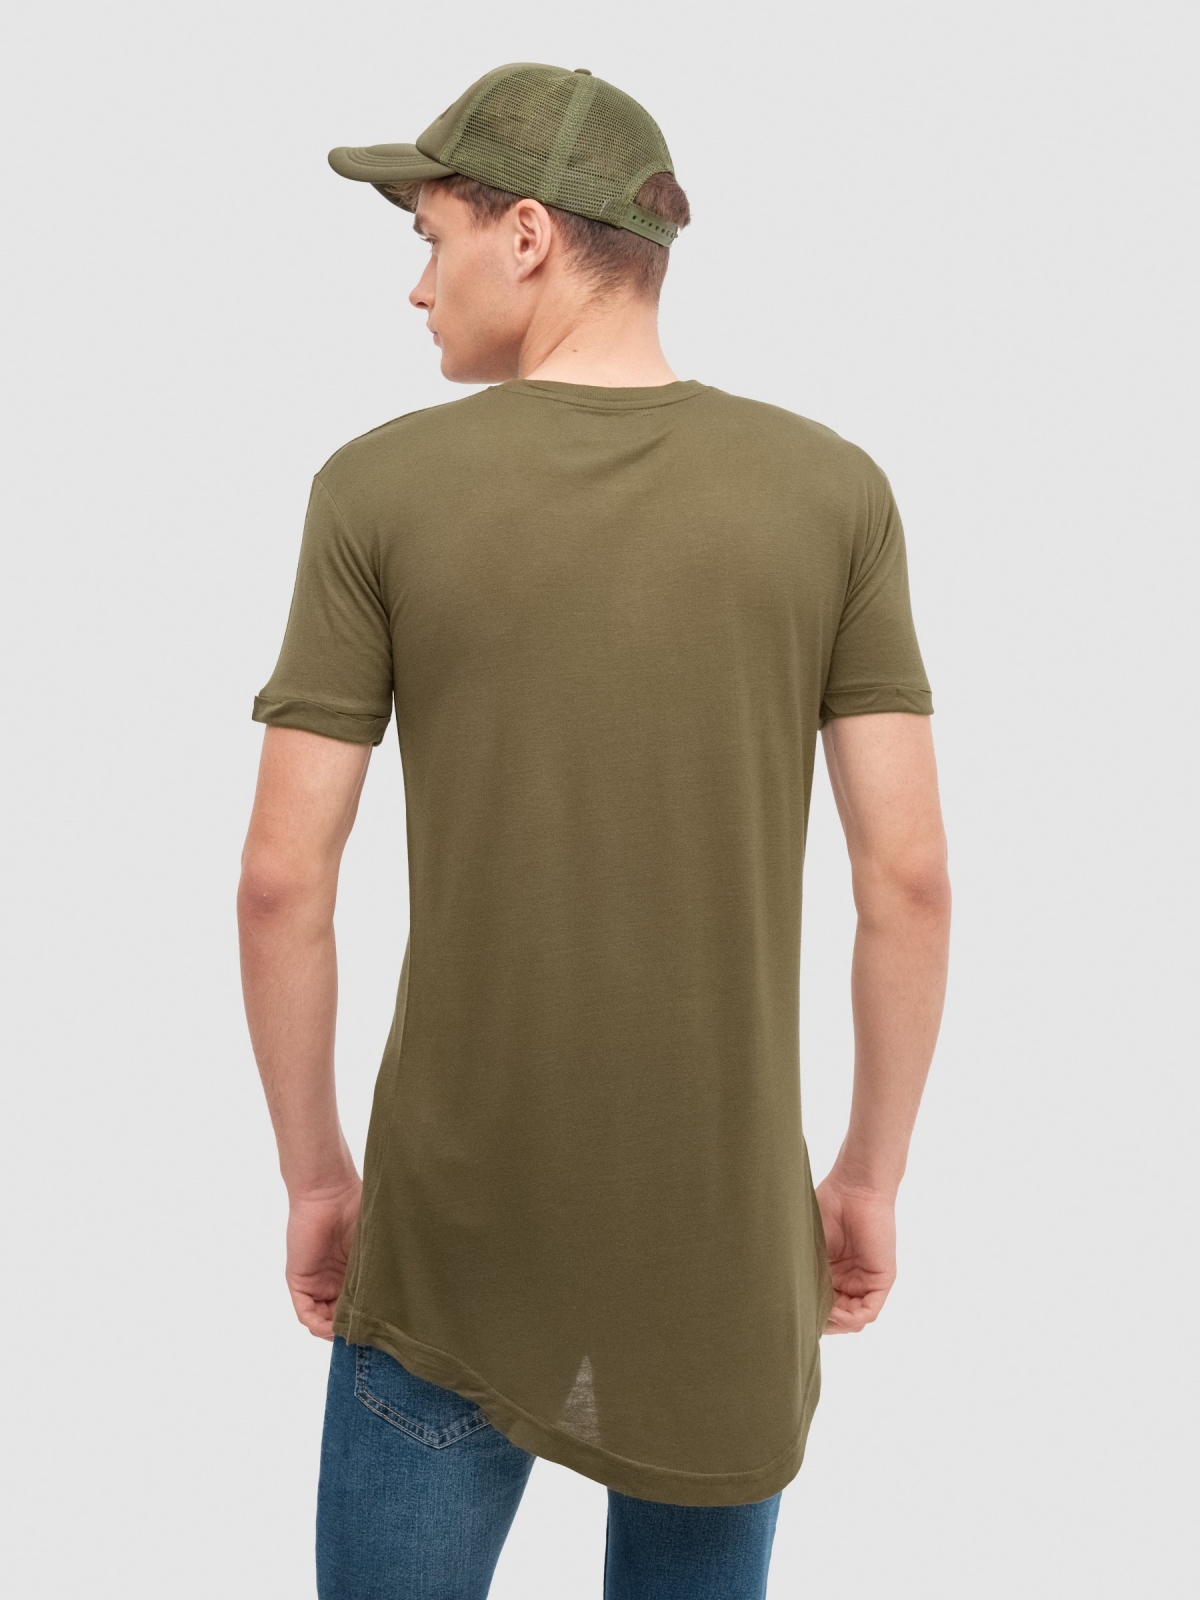 Long basic t-shirt khaki middle back view